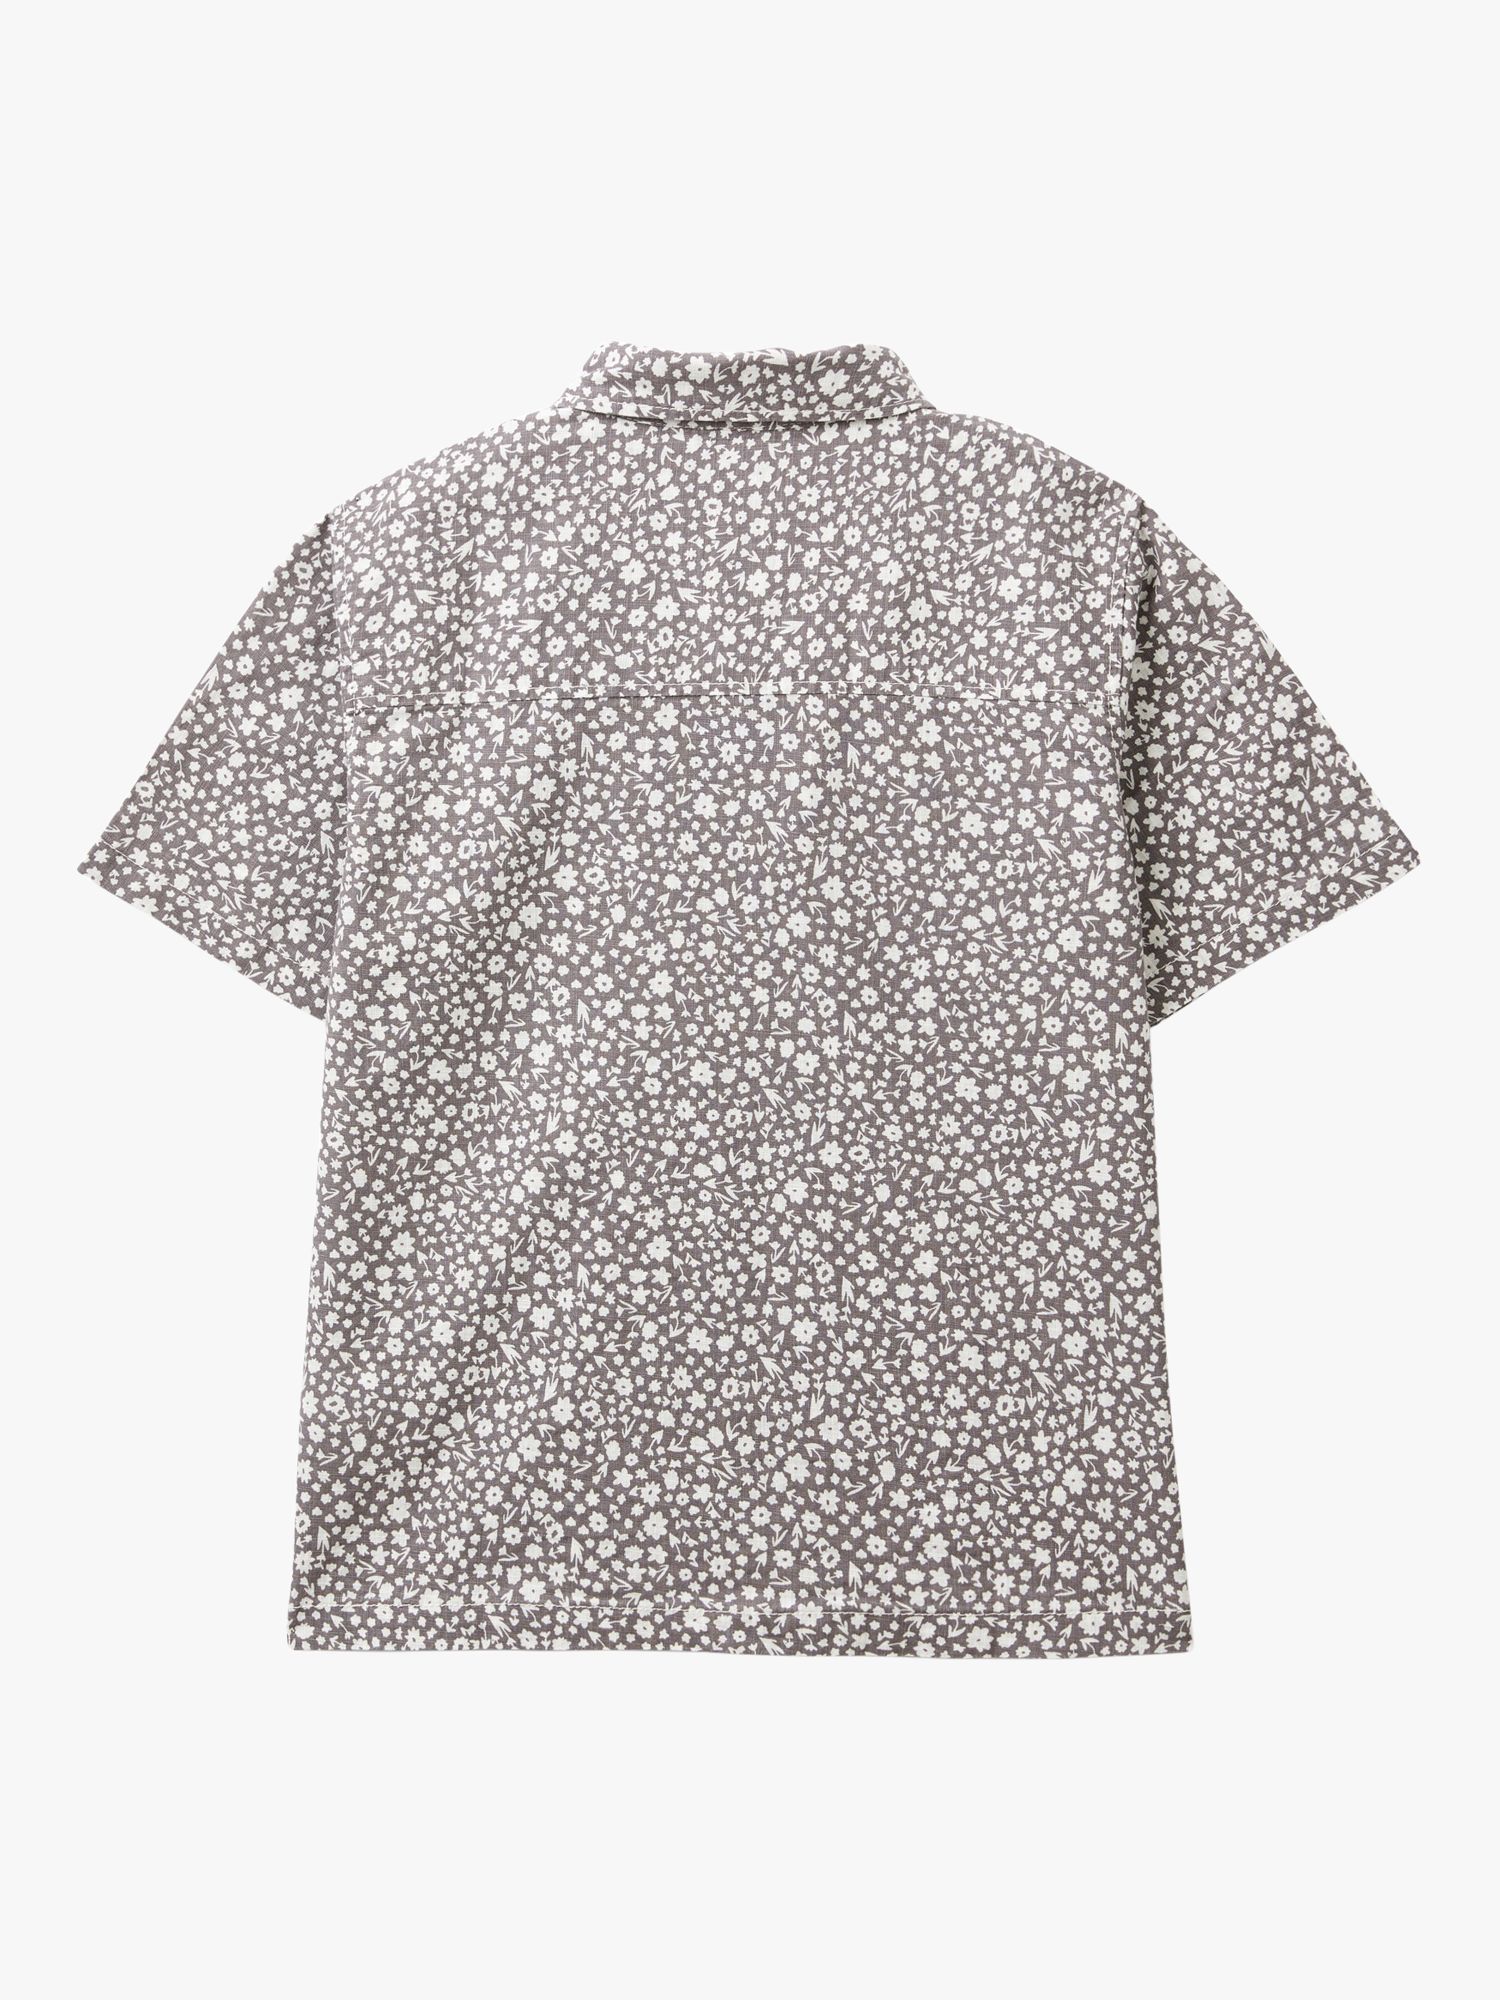 Benetton Kids' Floral Print Short Sleeve Shirt, Grey/Multi, 6-7 years